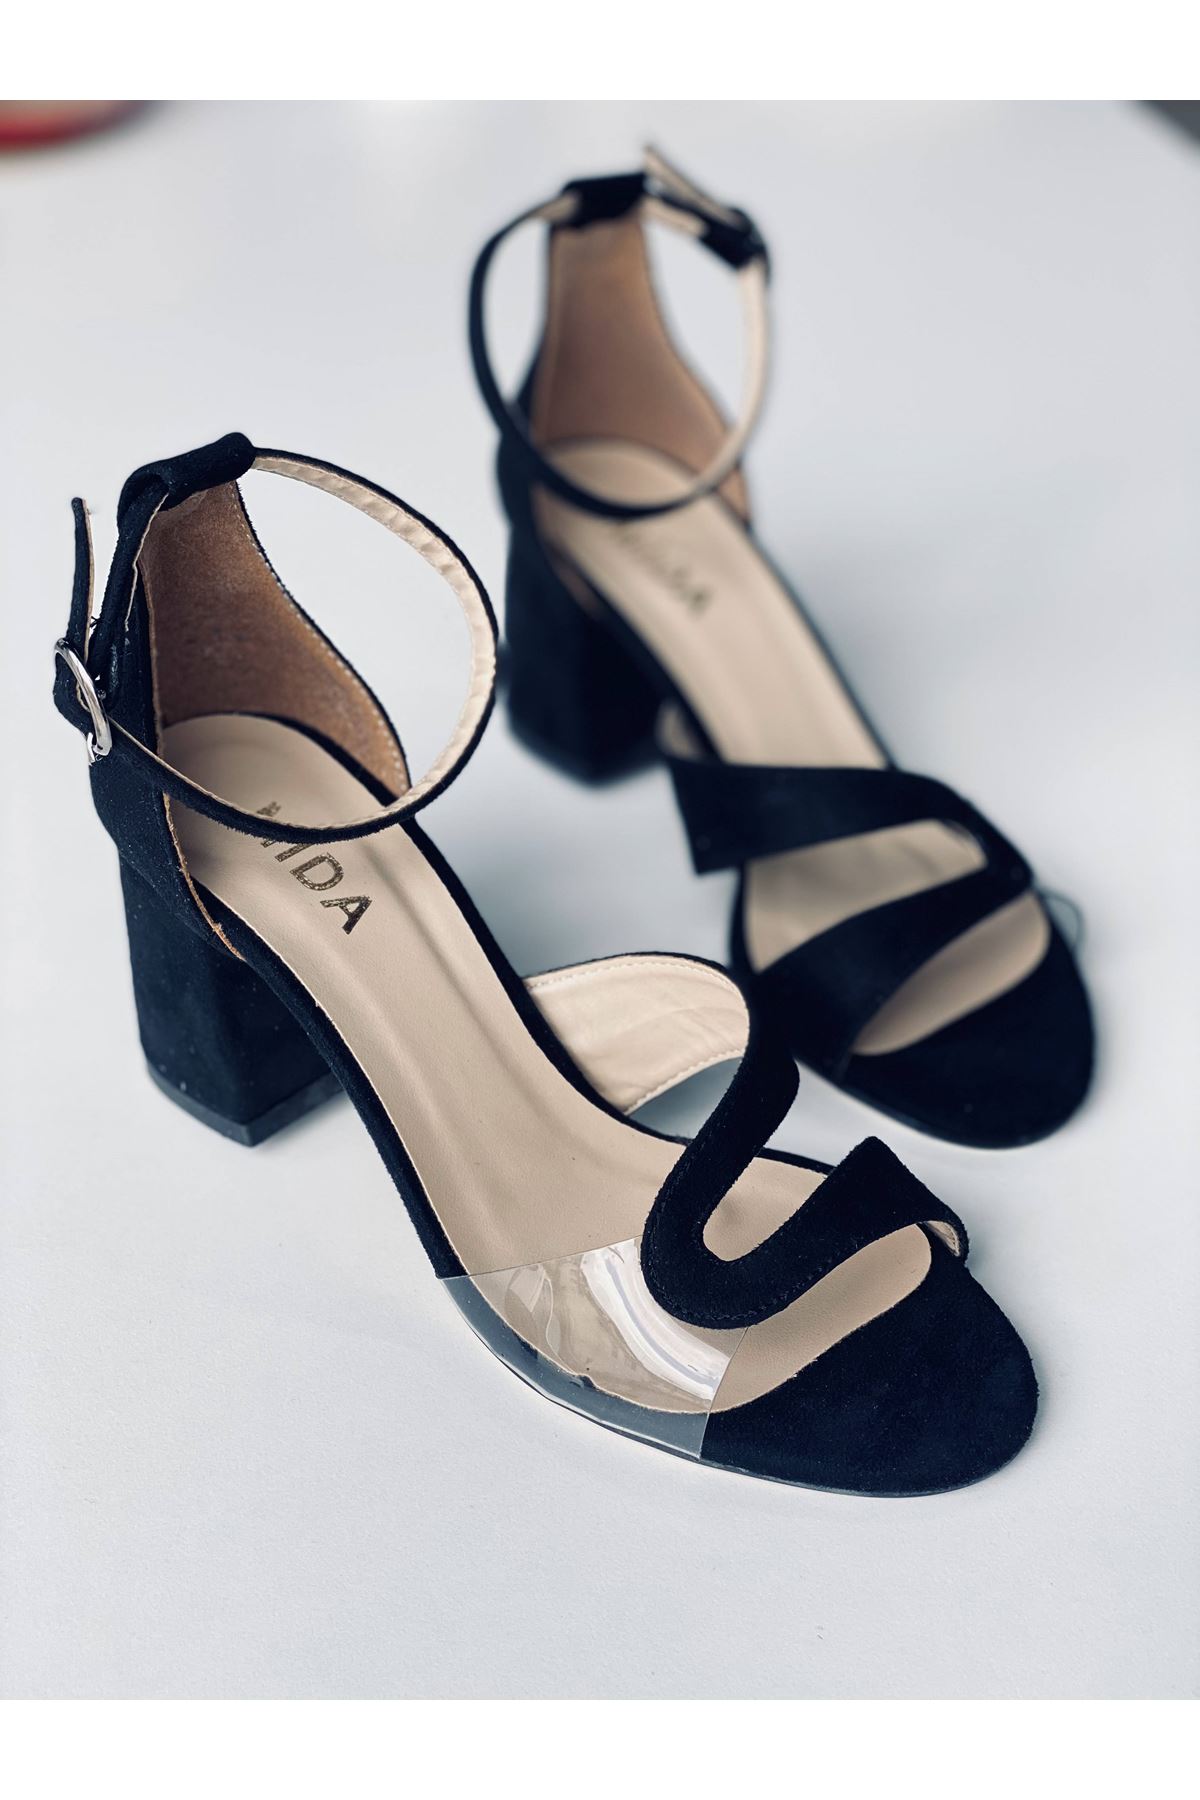 Mida Shoes Y610 Siyah Suet Topuklu Ayakkabı